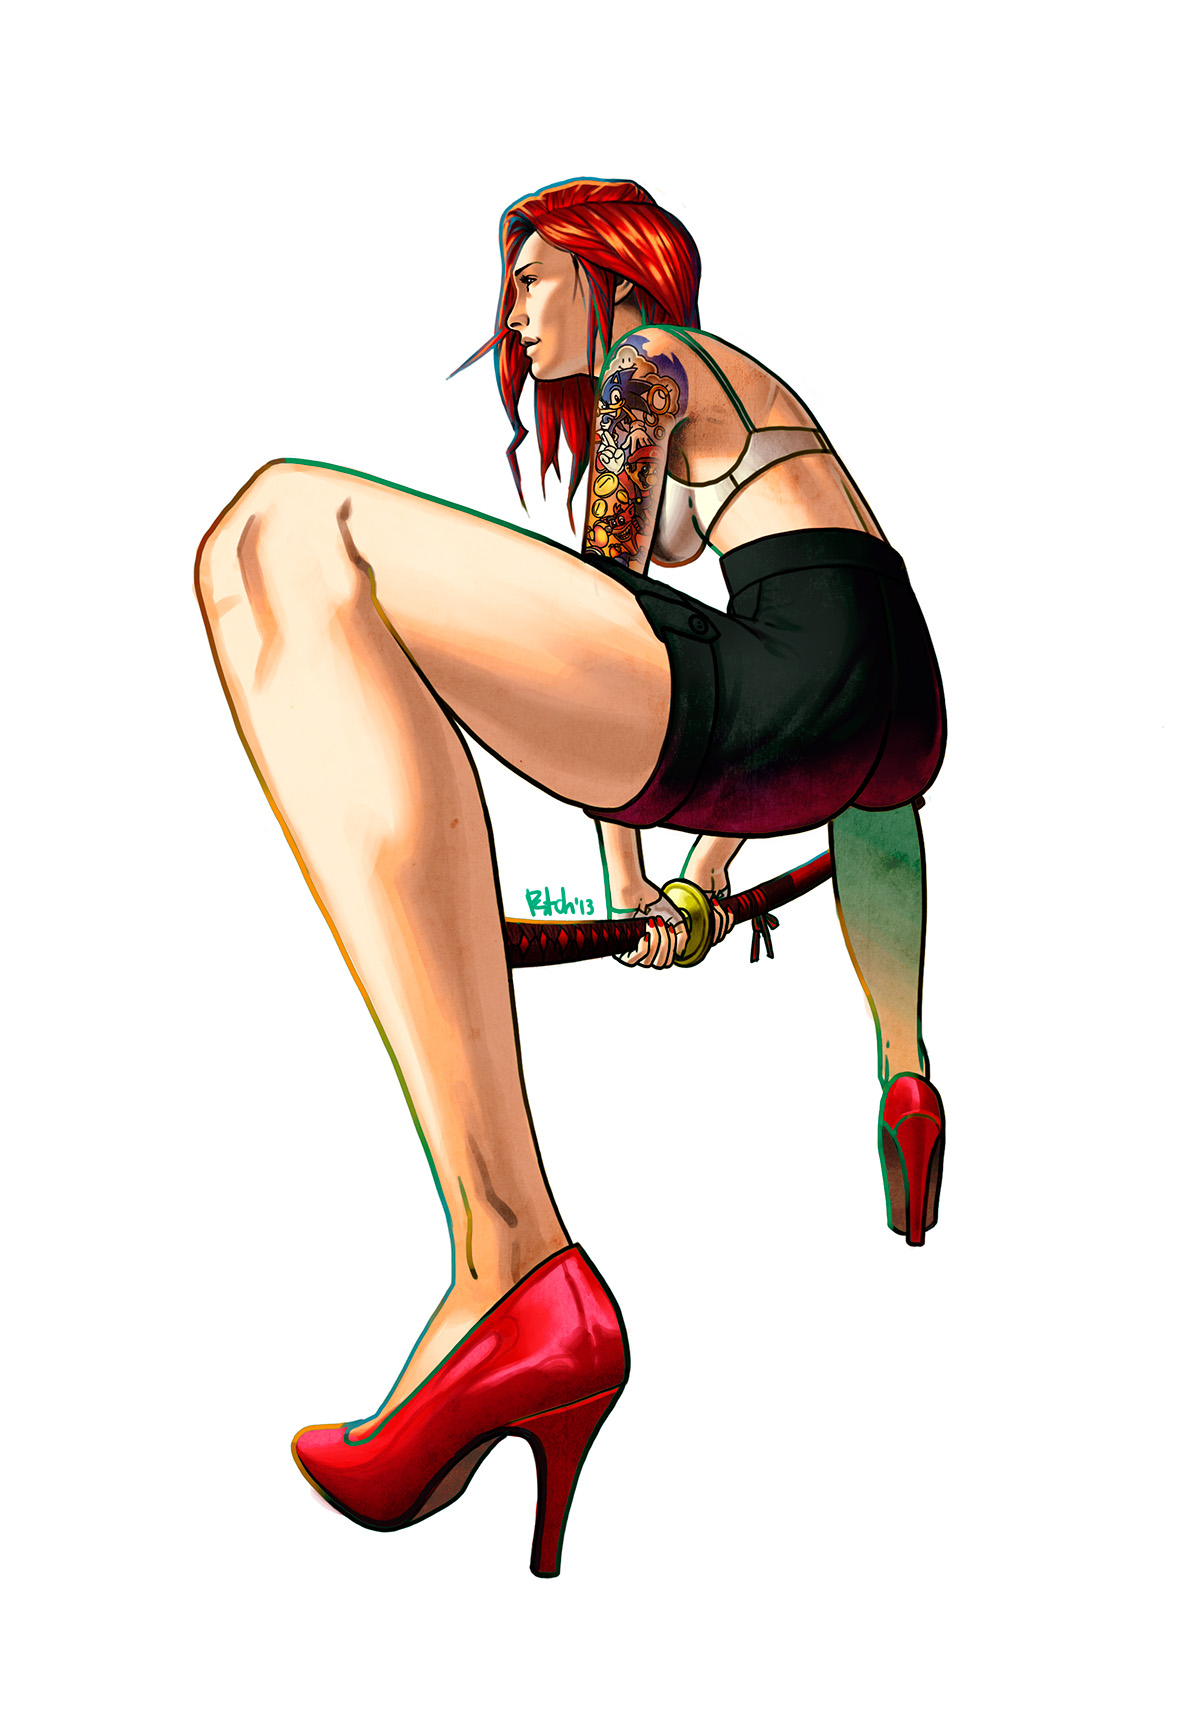 samurai woman katana ronin redhead temple temper girl tattoo sonic mario crash bandicoot